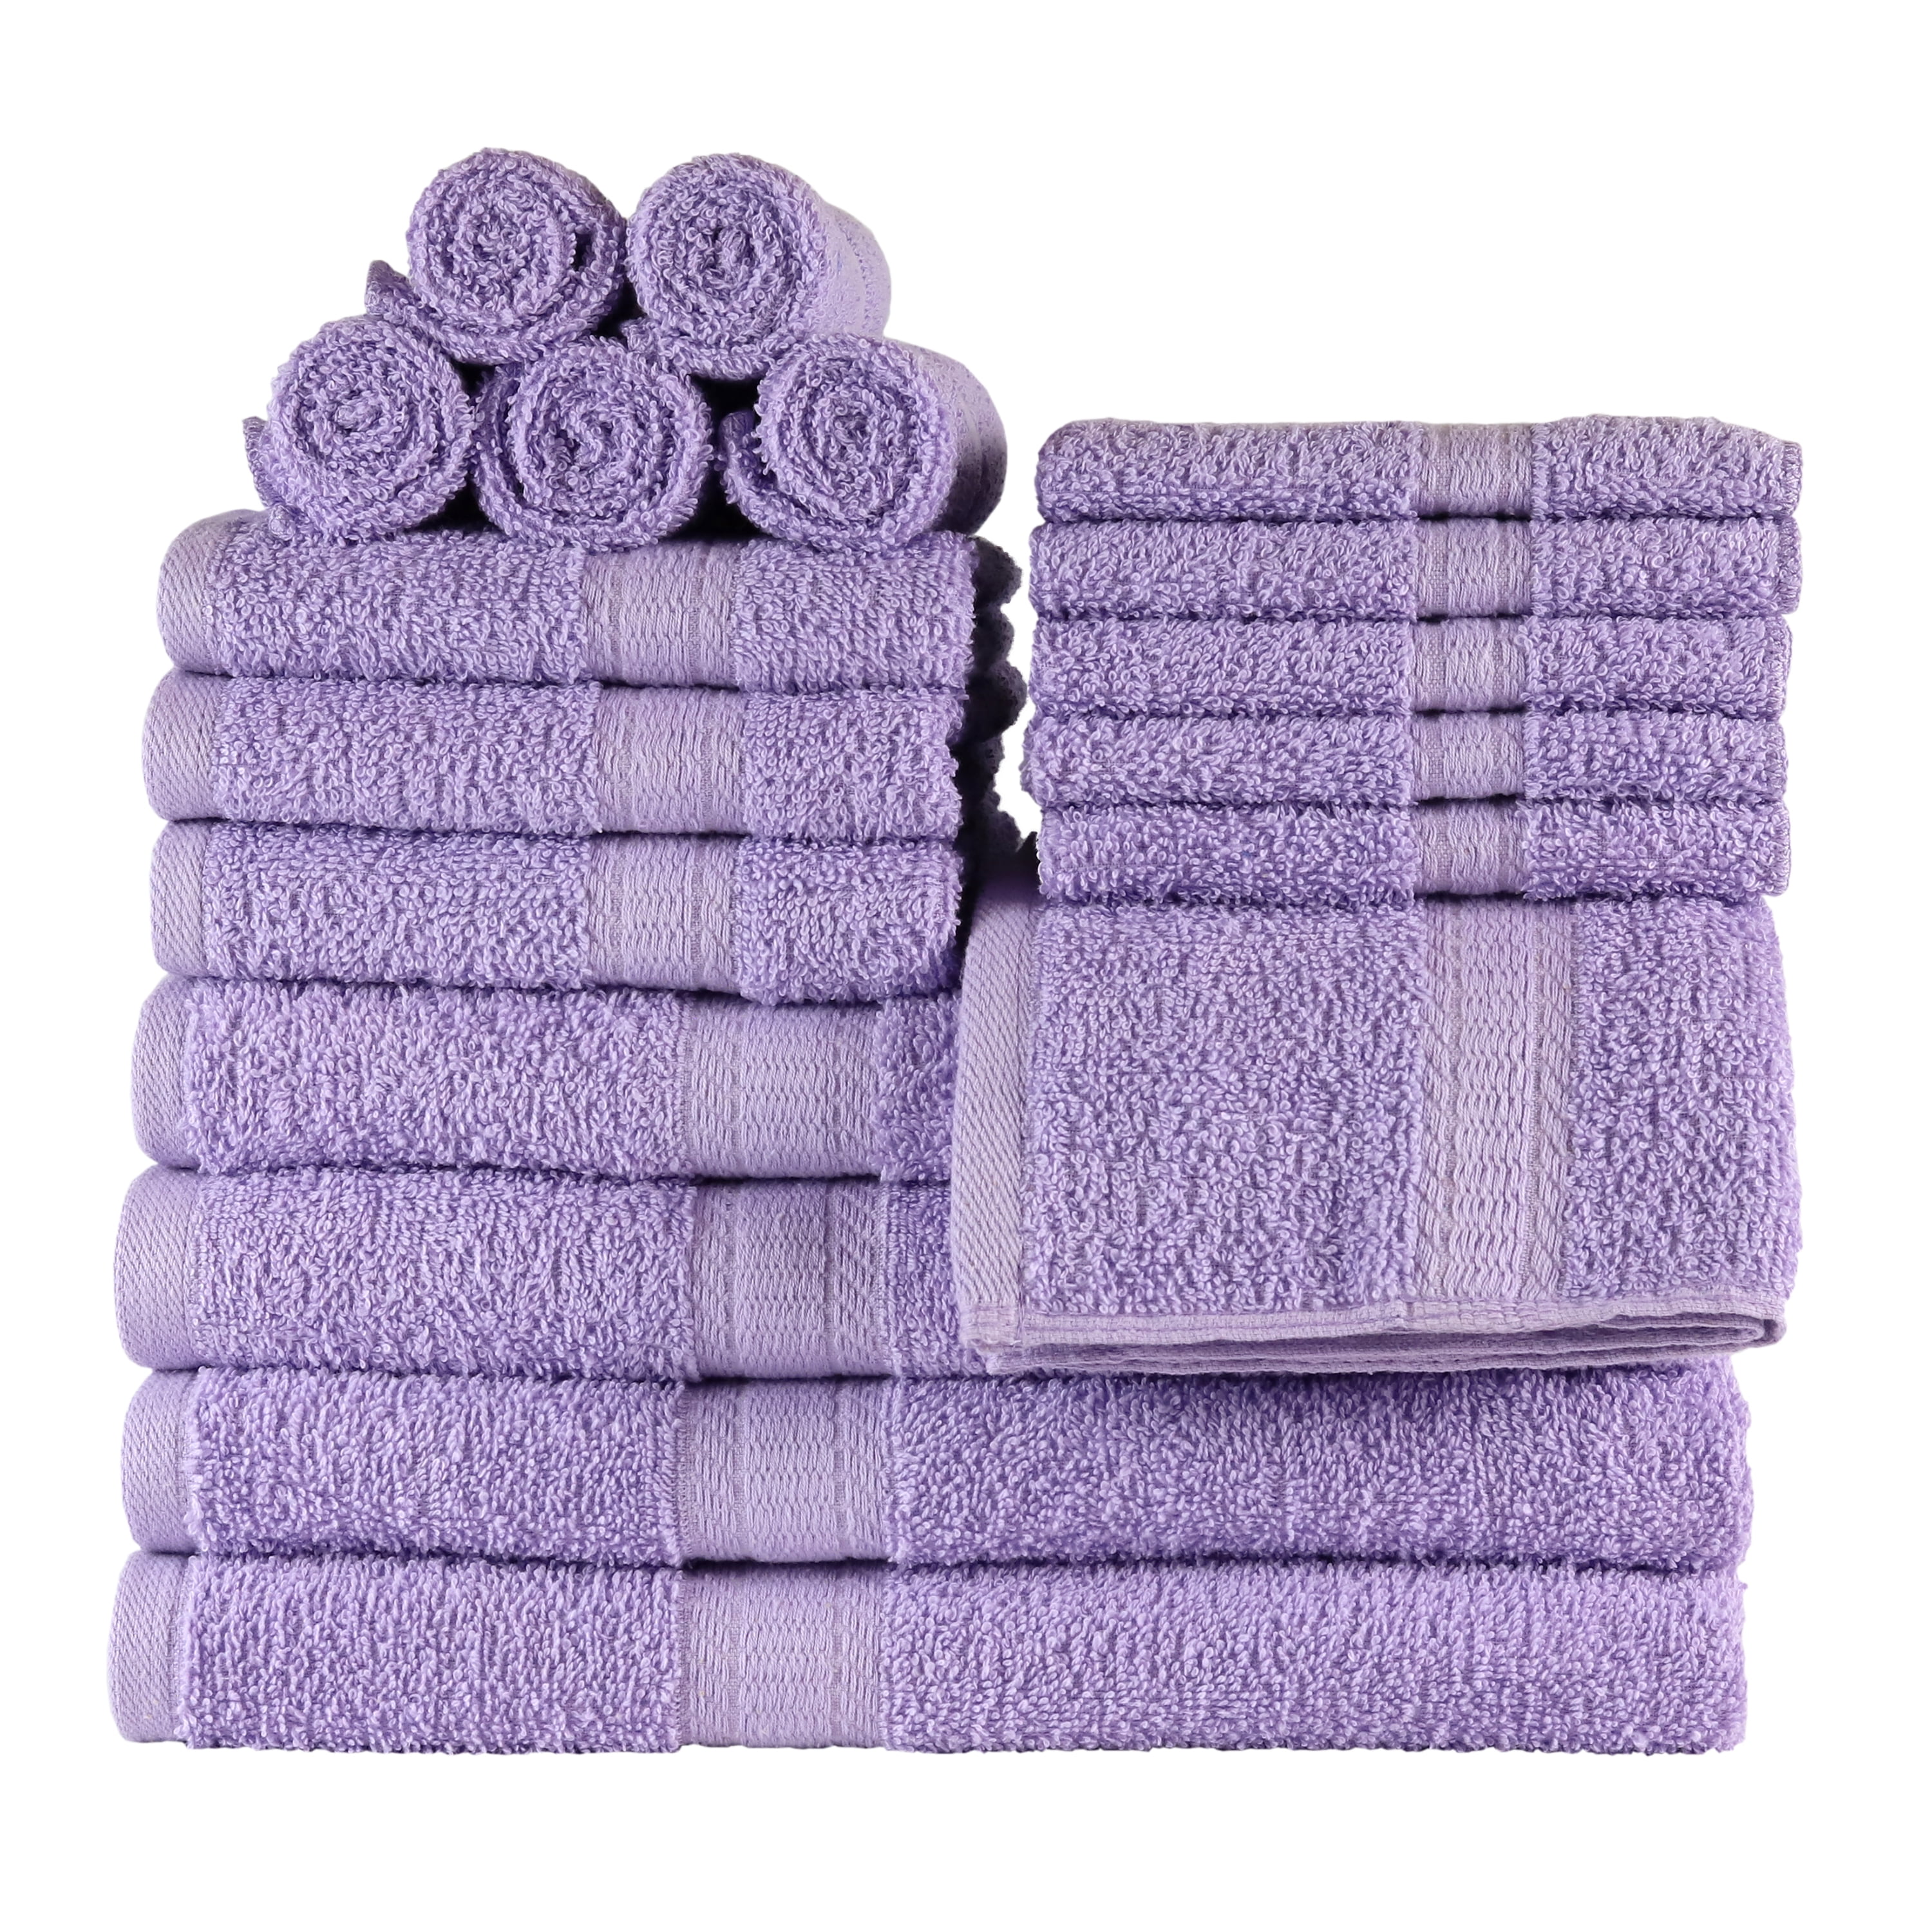 18-Piece Towel Set Blue Shell Mainstays Basic Bath Collection 4 Bath, 4 Hand, 